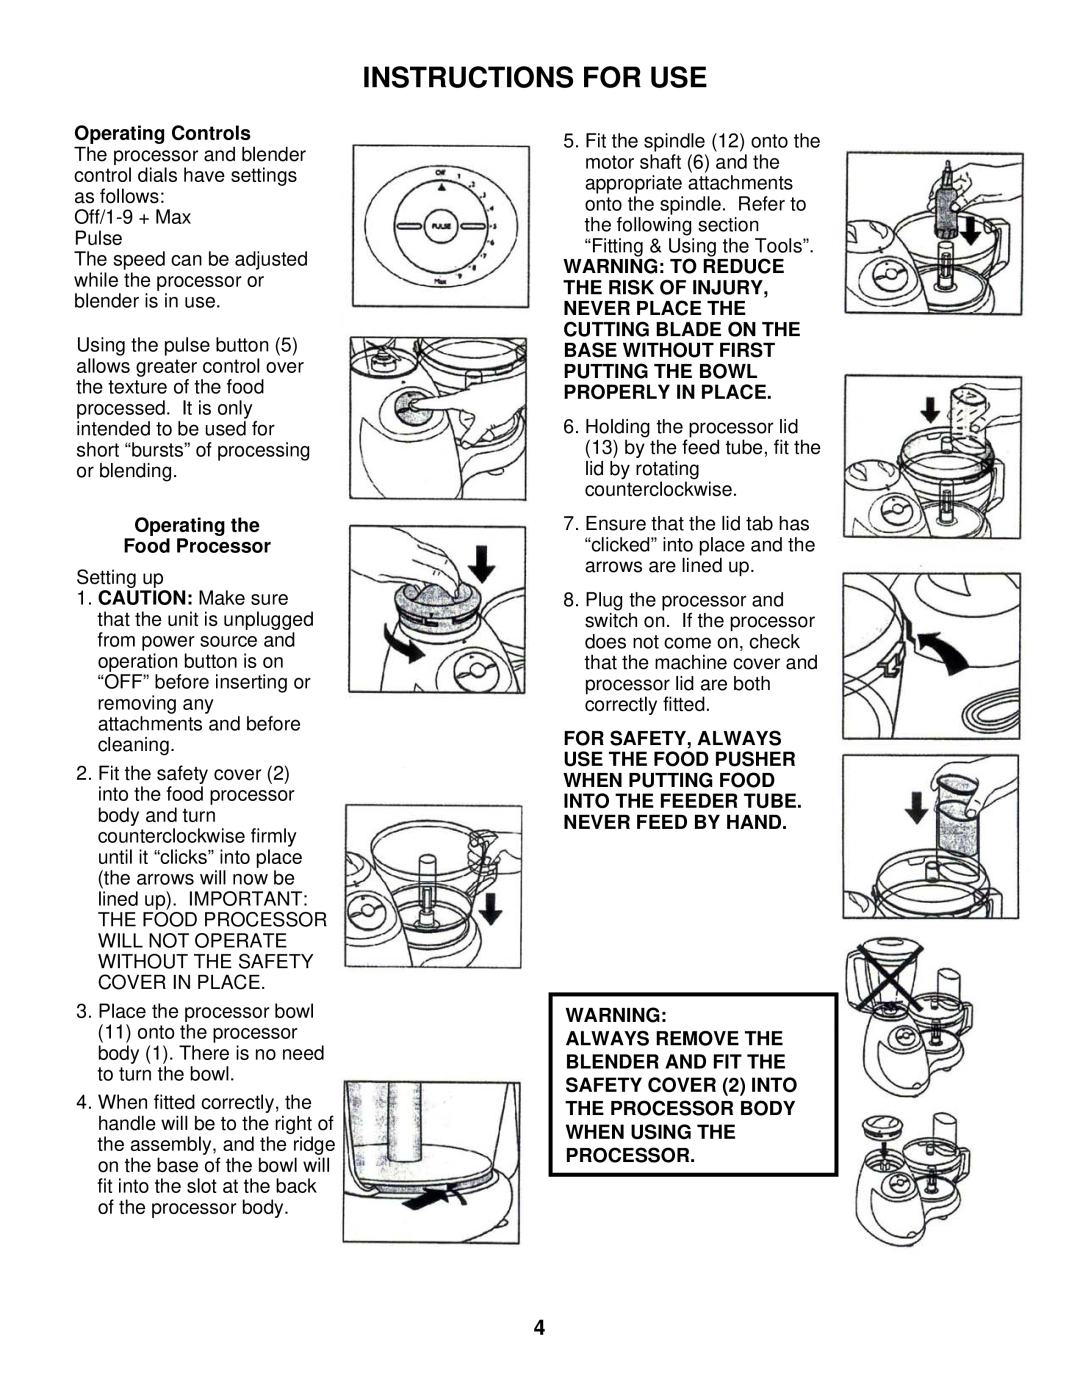 Euro-Pro EP90E instruction manual Instructions For Use 